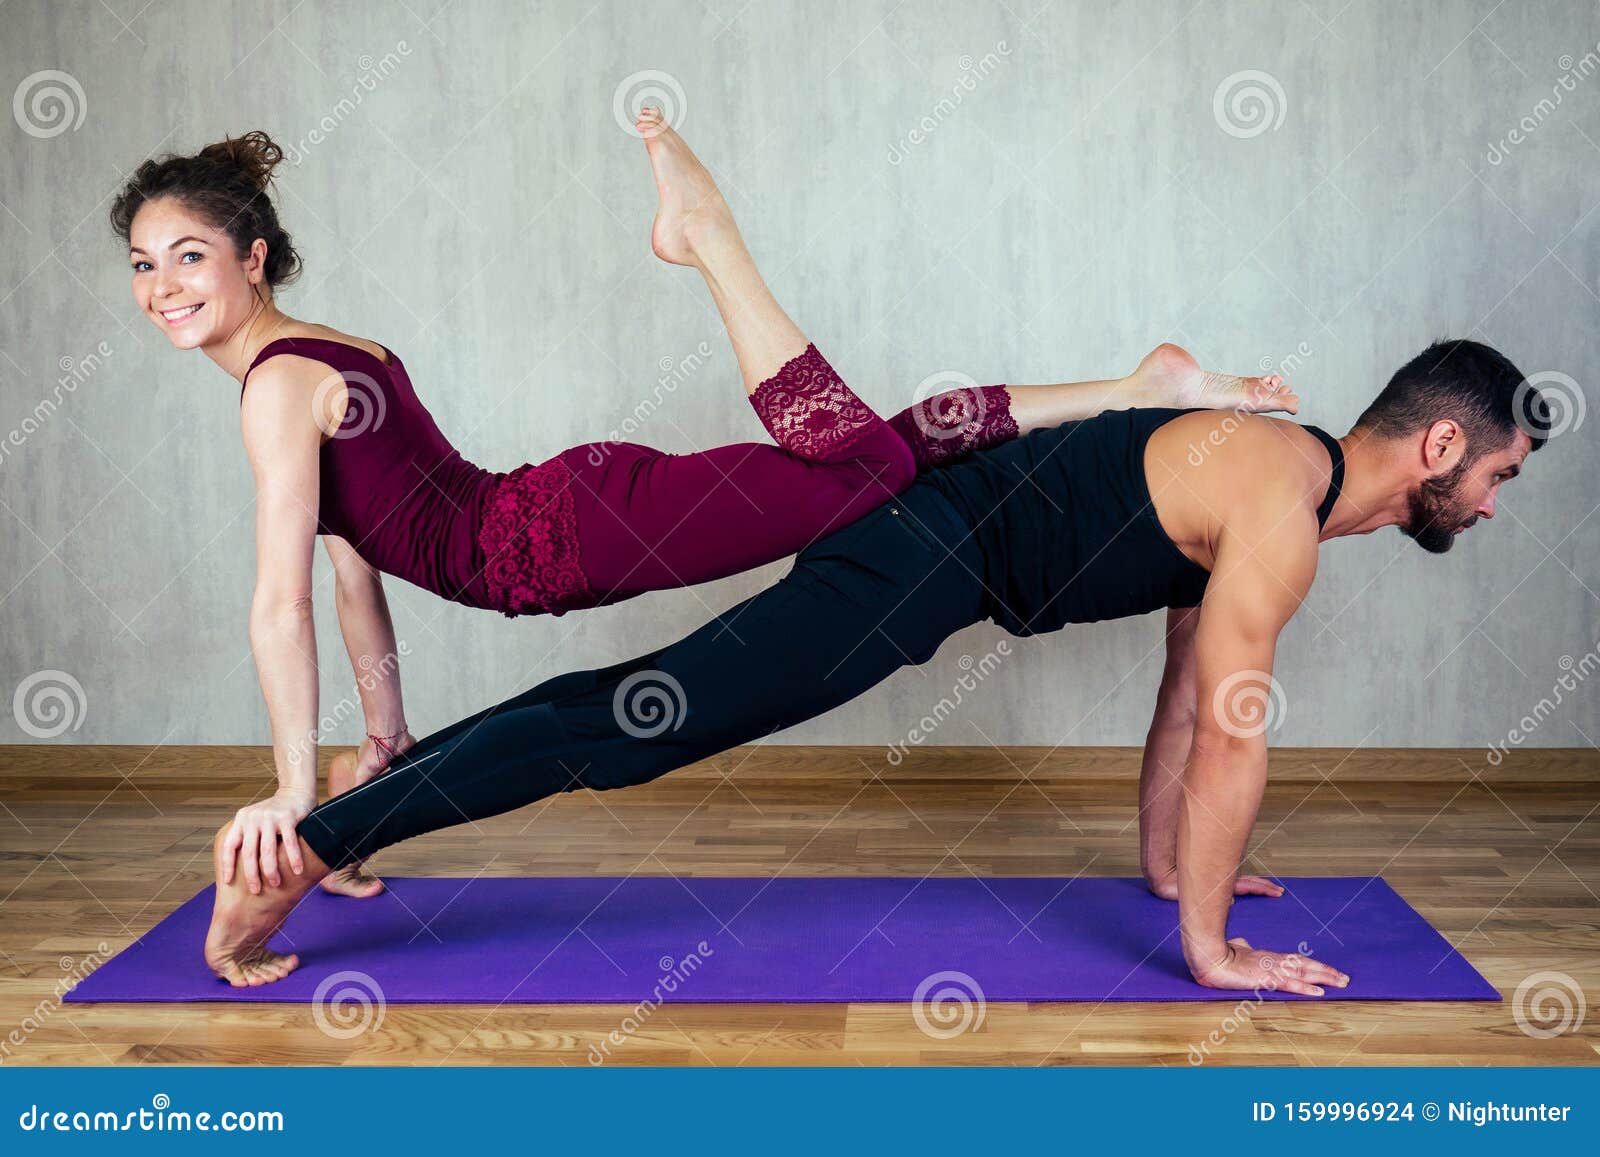 beautiful woman curly hair muscular man practicing yoga together yoga mat concept tantric yoga beautiful 159996924